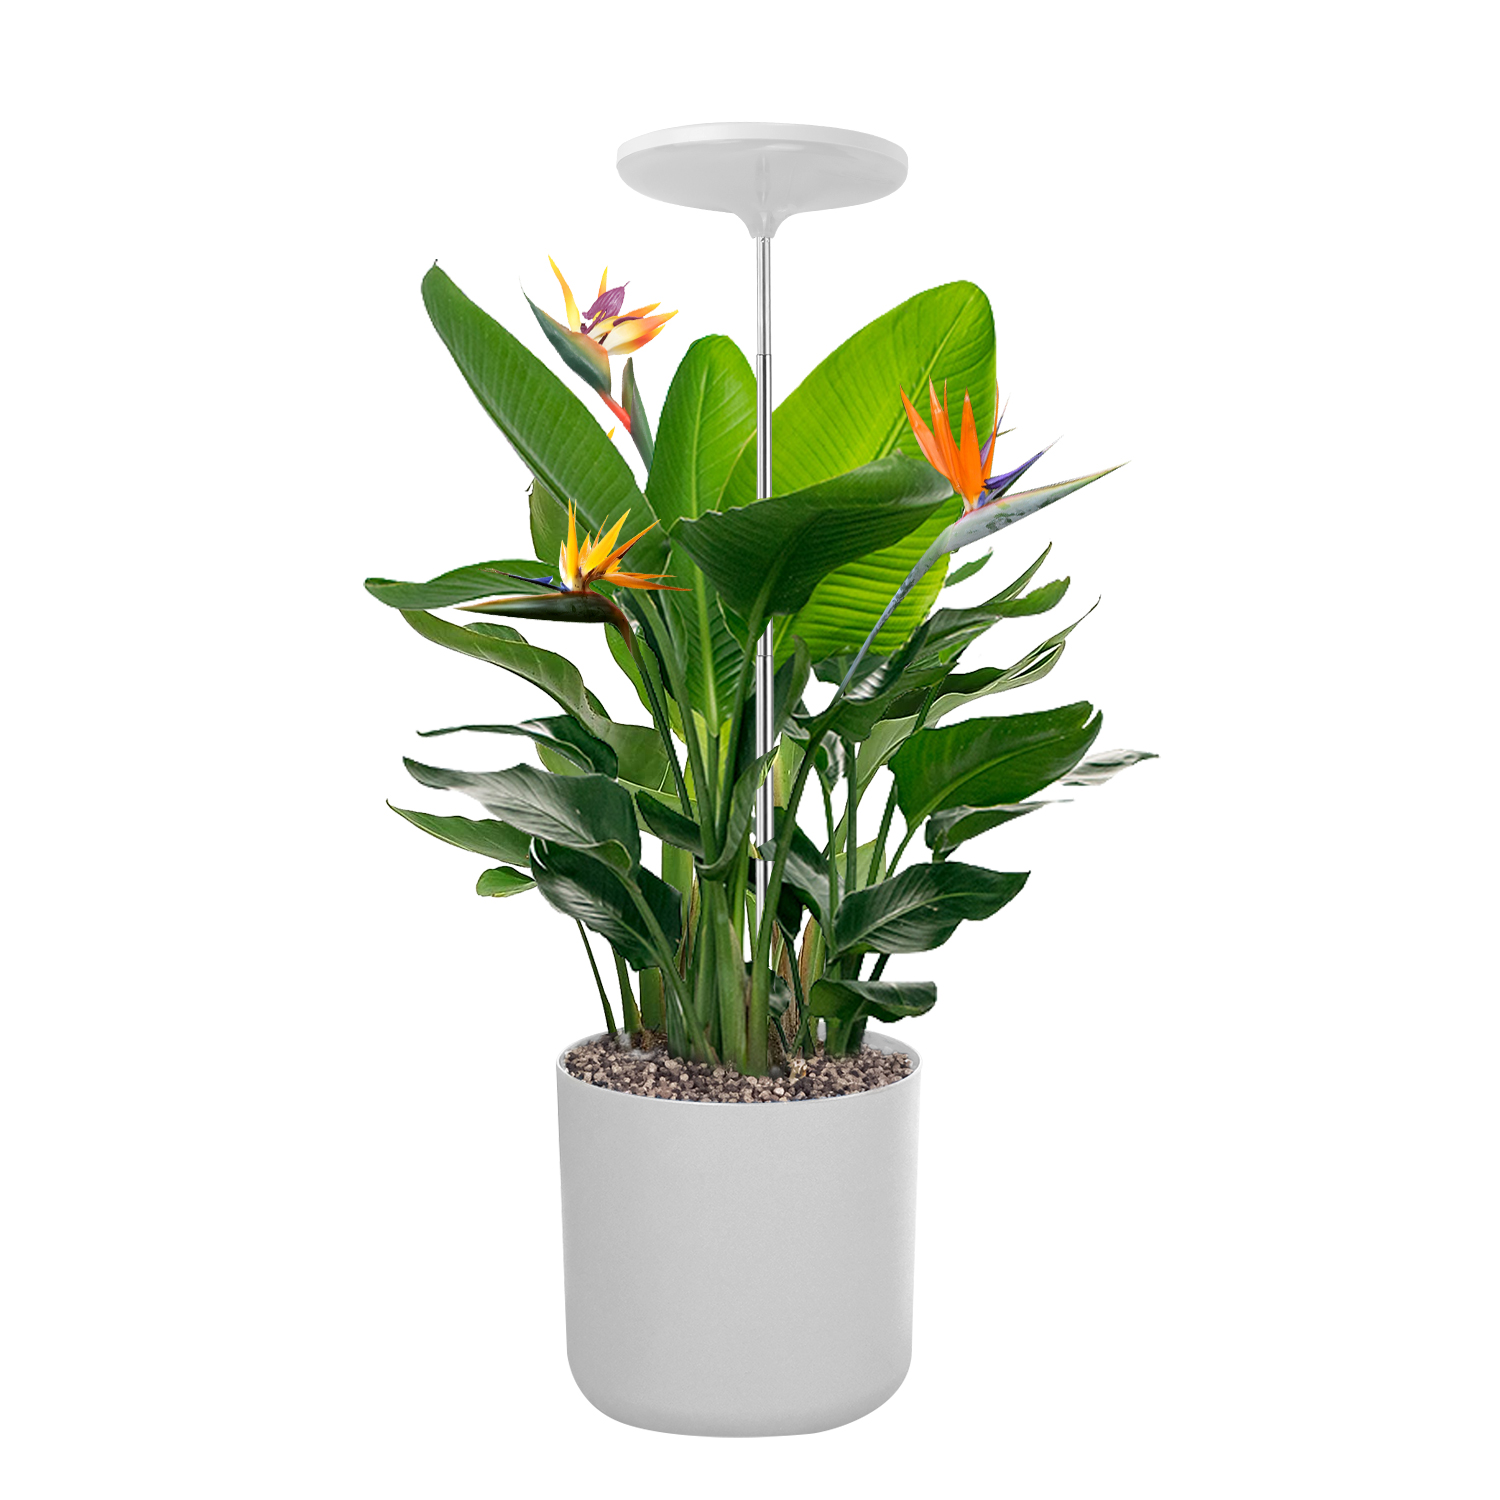 TG004 Indoor Smart Plant Grow Light မီးအိမ် Garden Grow Lights Decorative Plant Lights